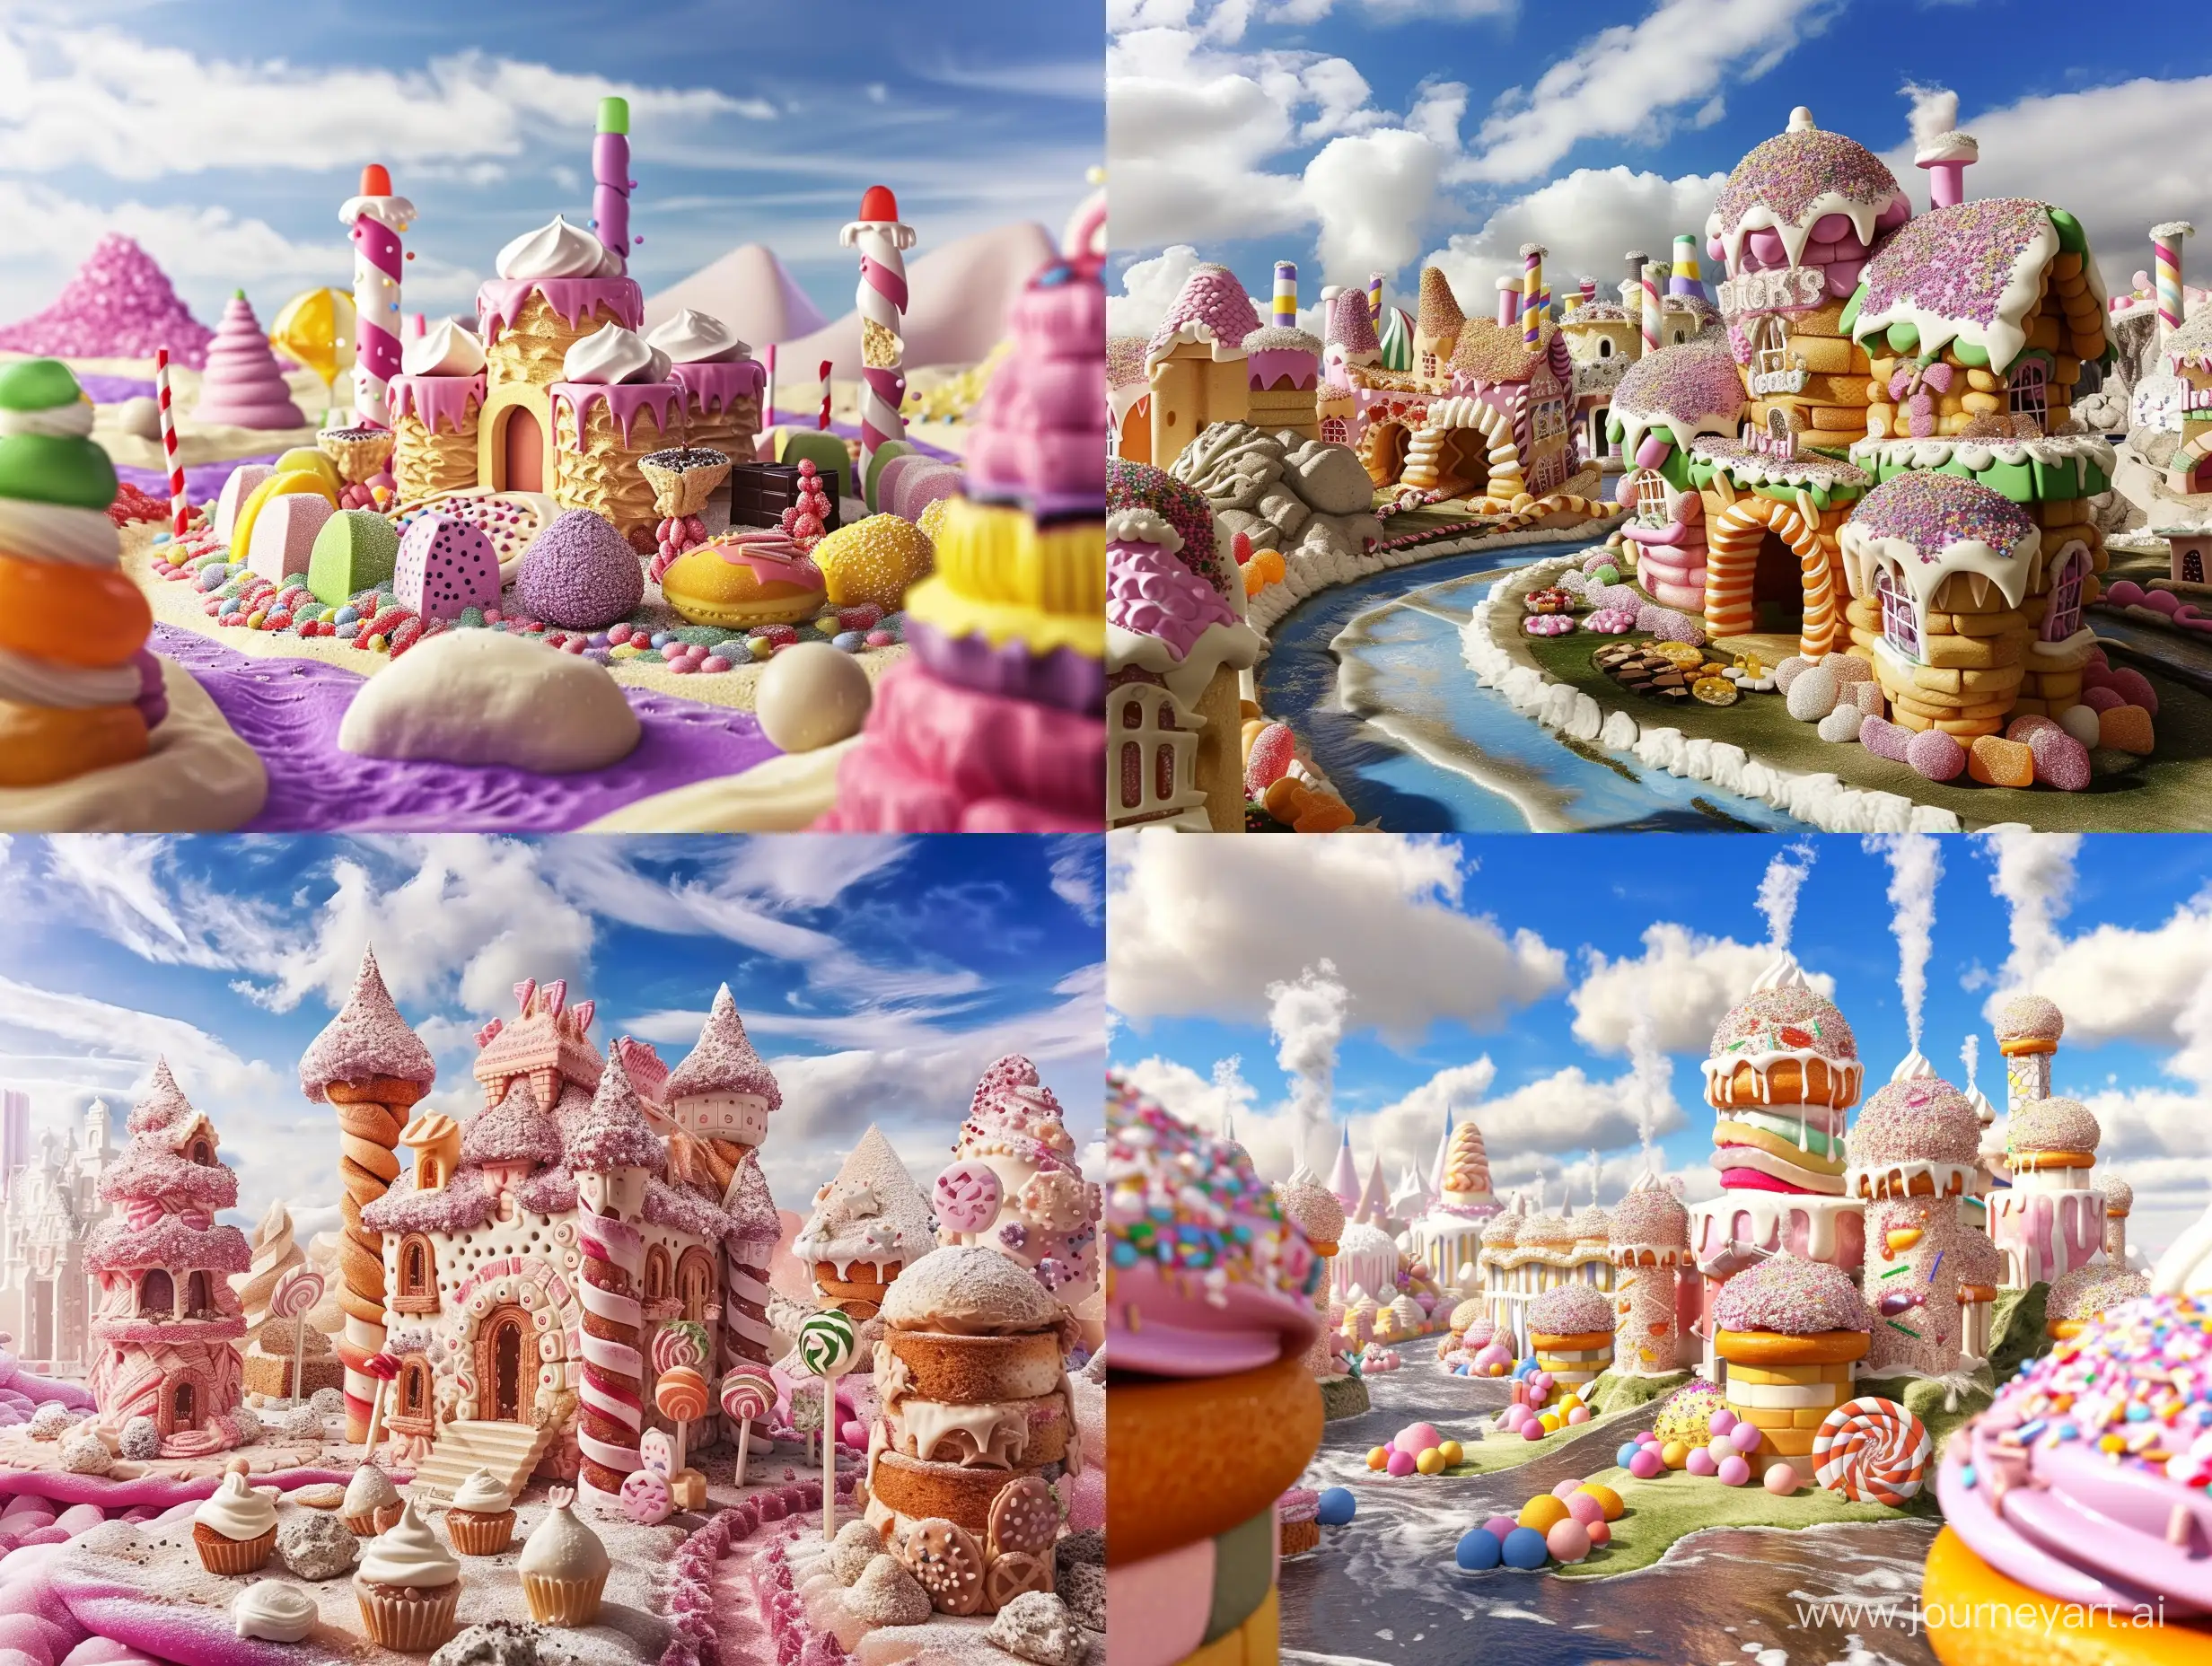 candy kingdom made of desserts, cakes, chocolates, fantasy, high quality